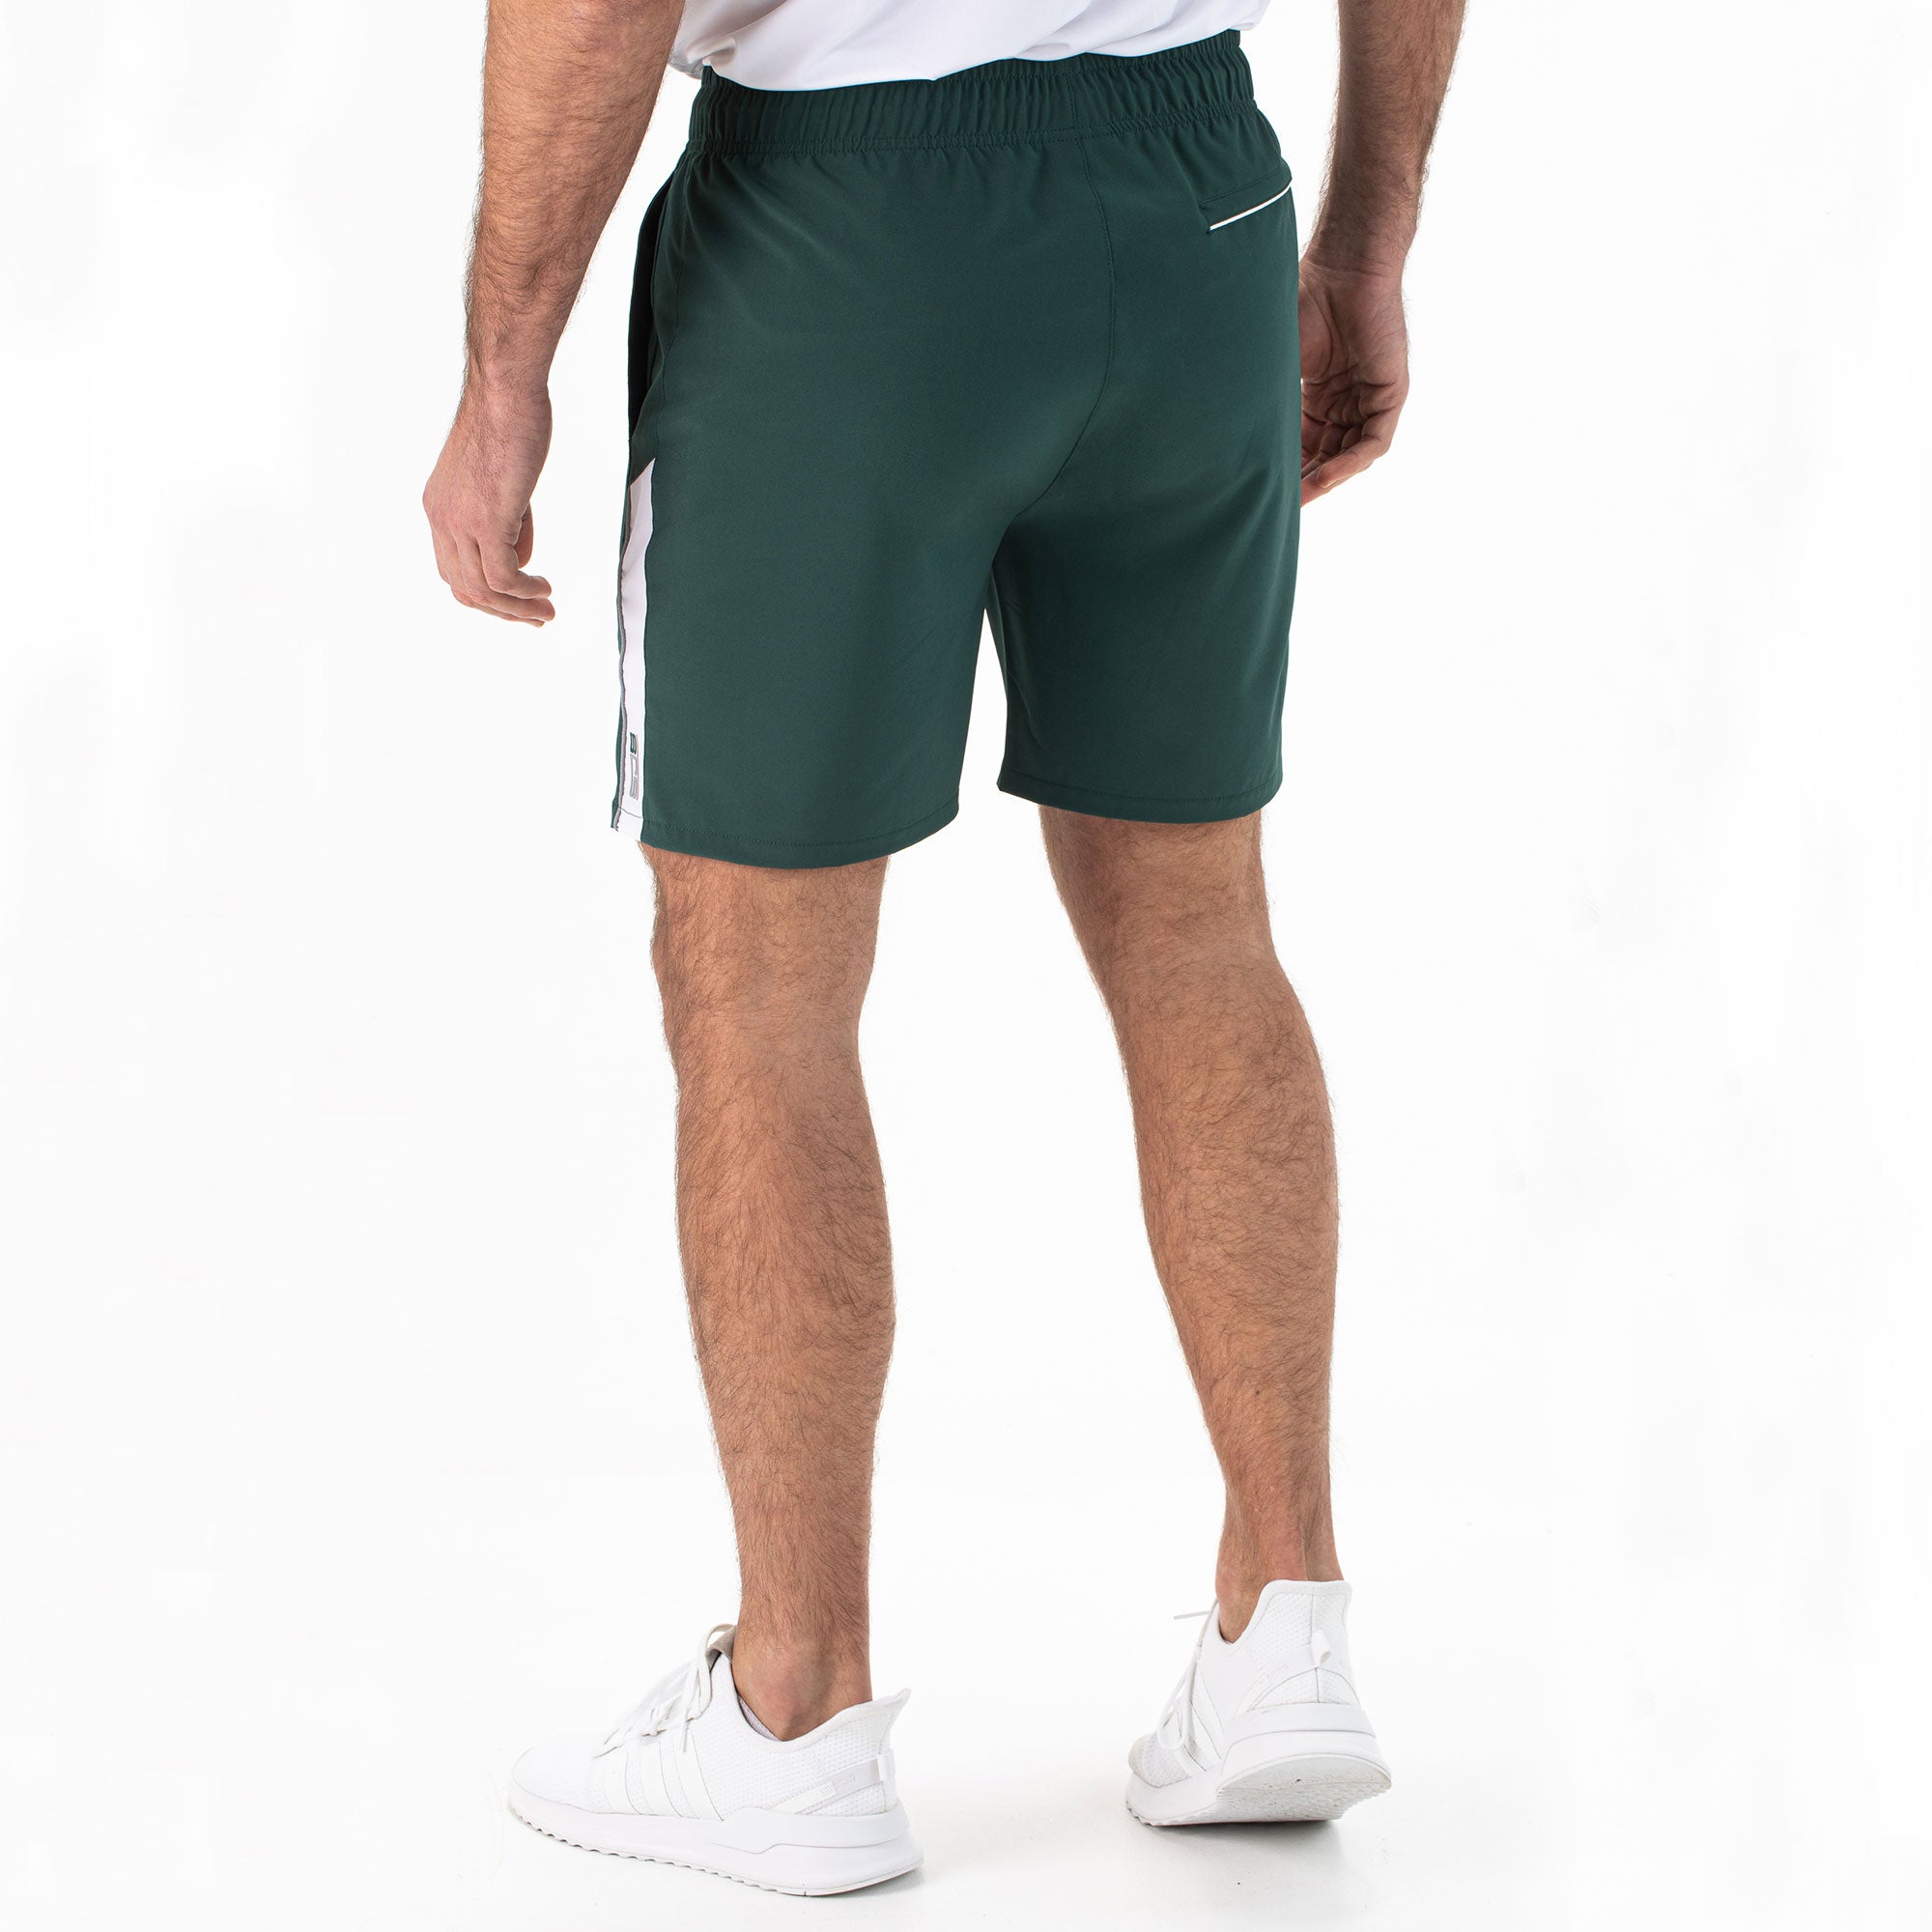 Sjeng Sports Evron Men's Tennis Shorts - Green (2)